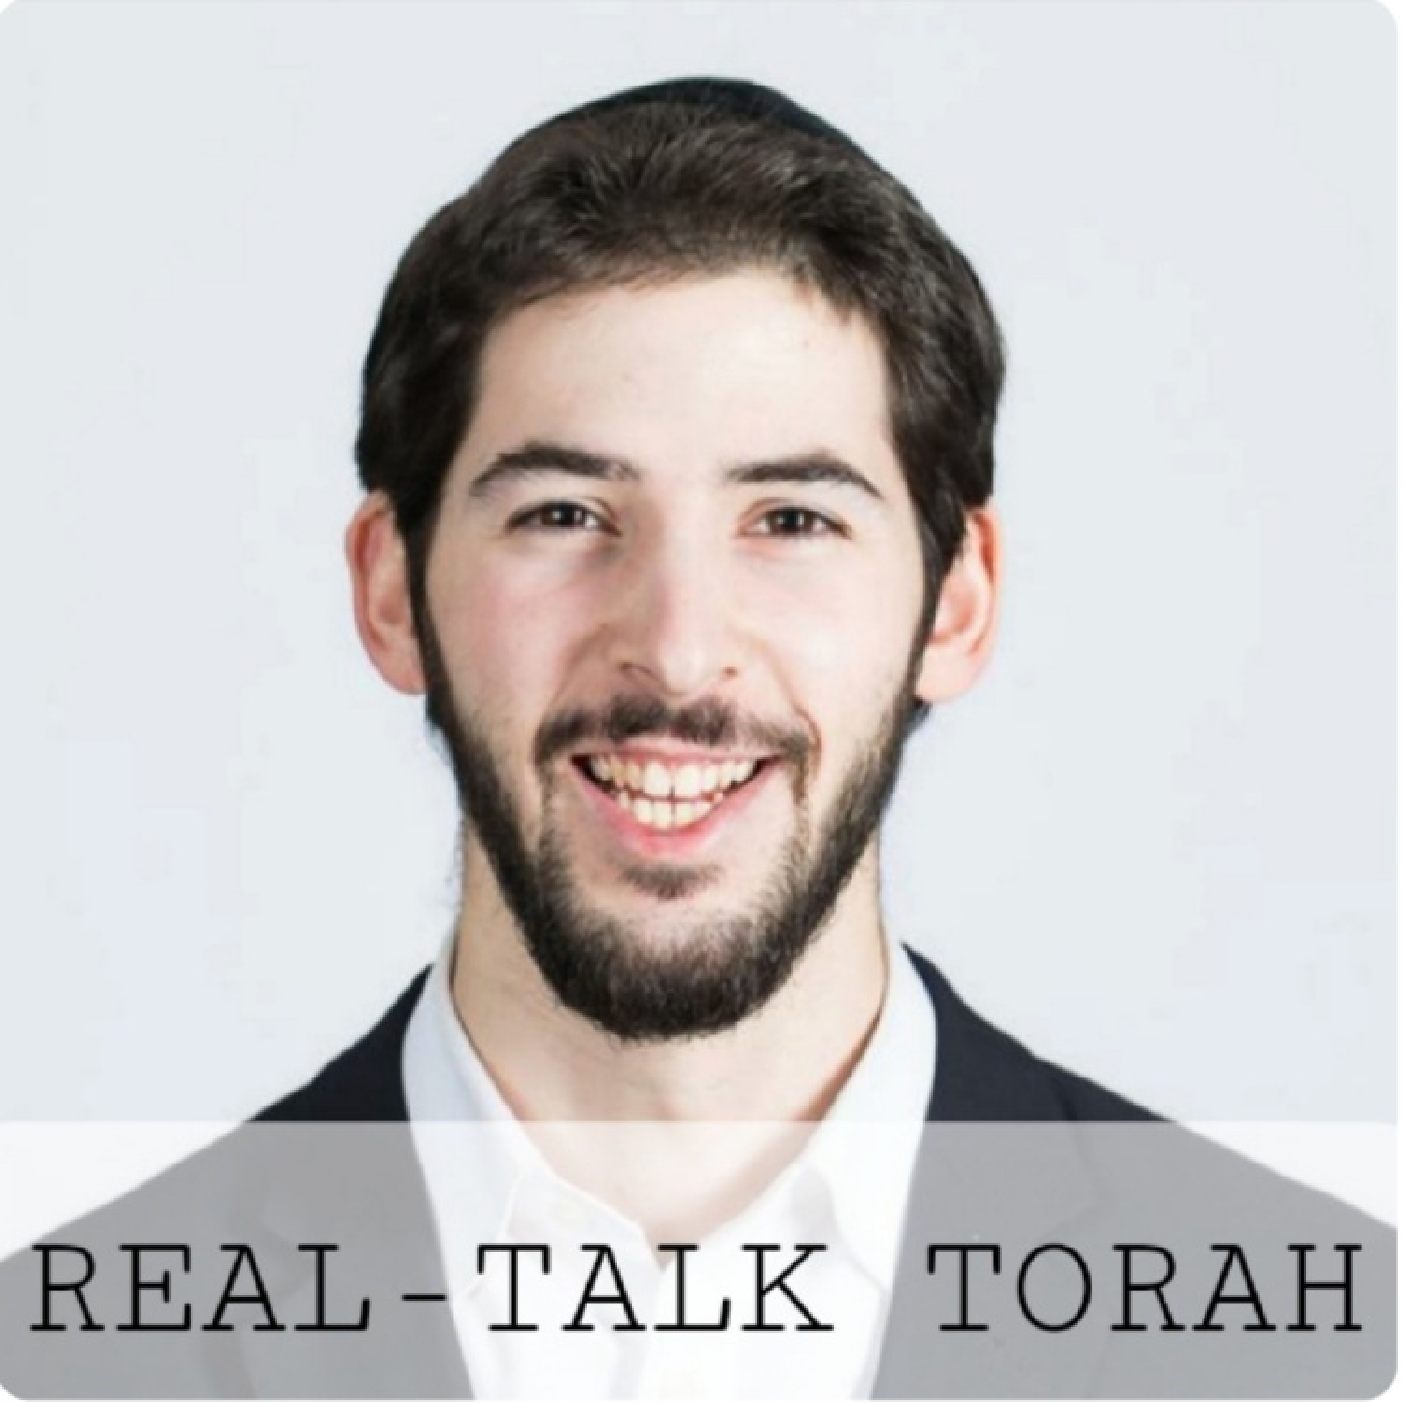 Real-Talk Torah: What is the Avodah of Bein HaZ'manim? ⏳️🏝⏳️